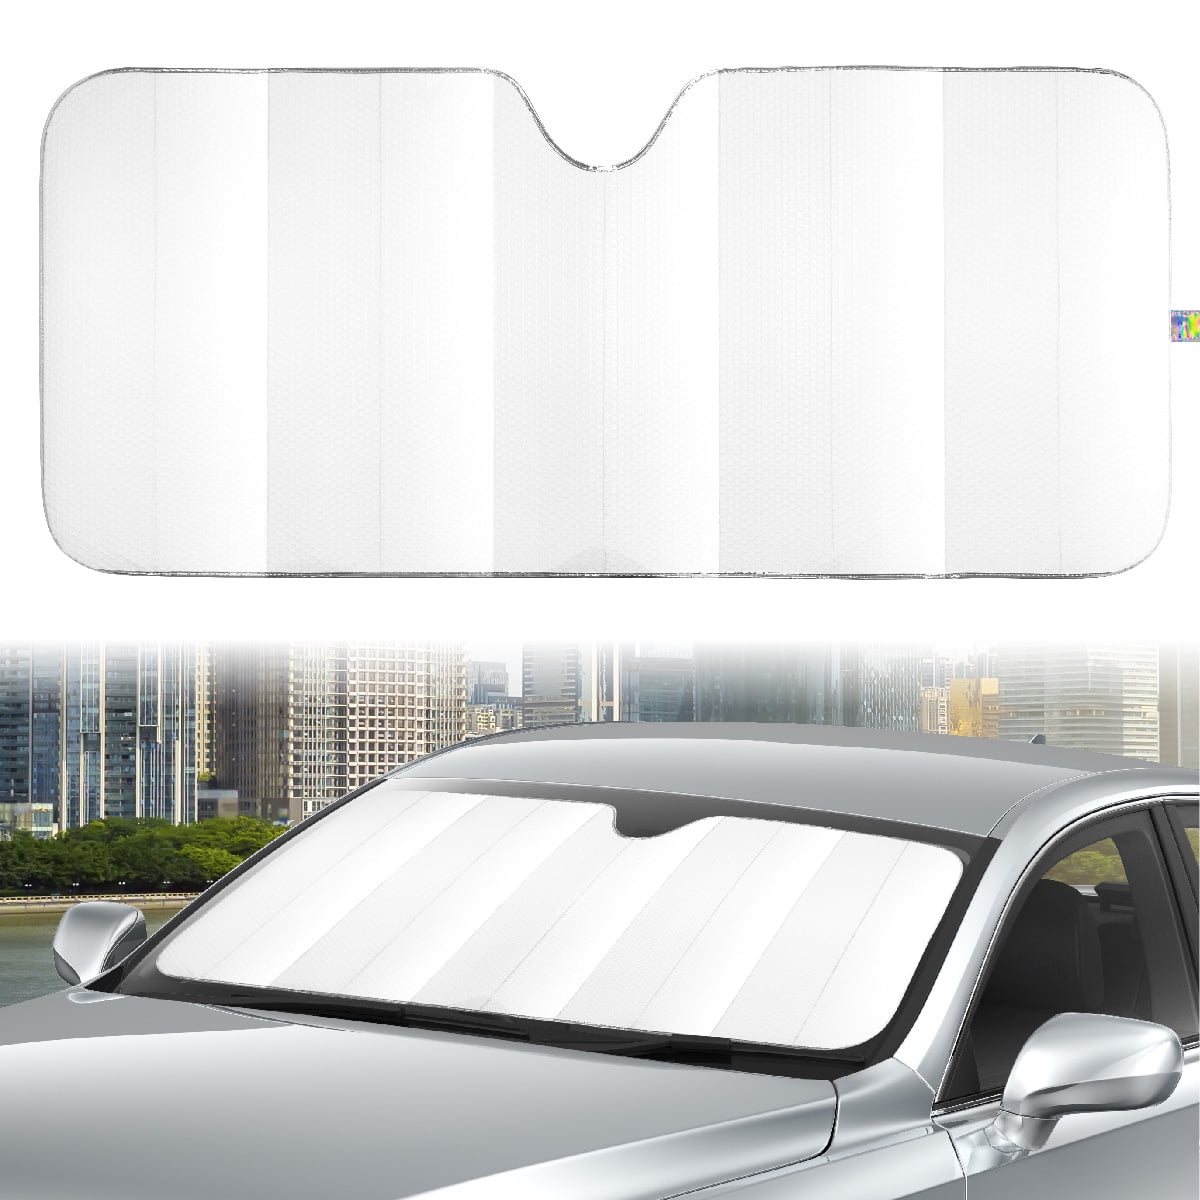 HOT Foldable Car Auto Sun Shade Windshield Sun Visor Cover Anti-UV Protector PAD